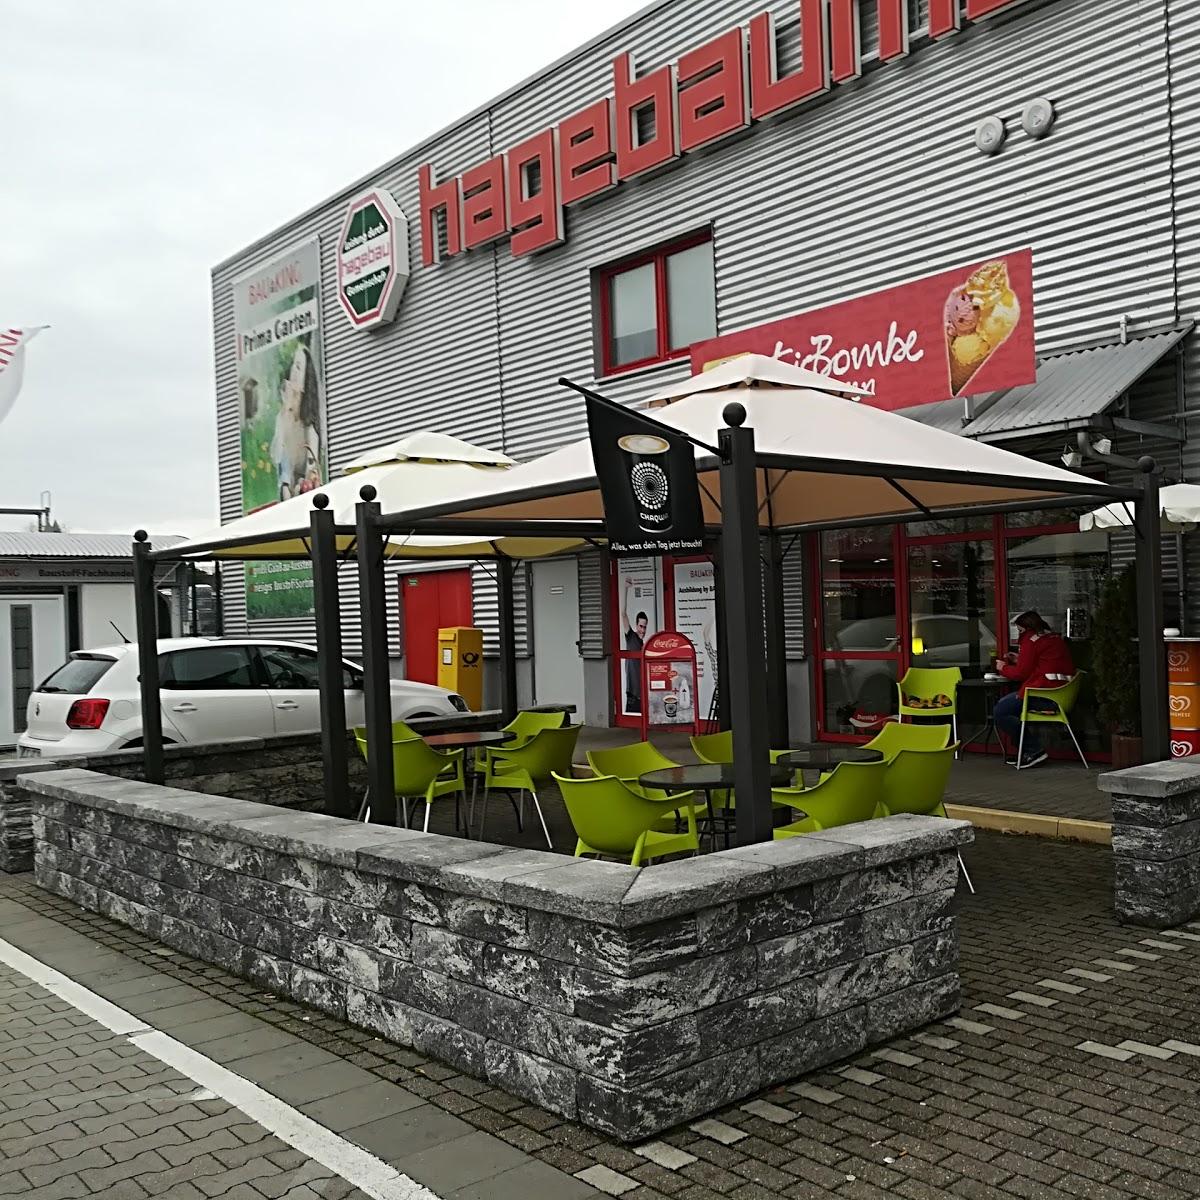 Restaurant "Eisbombe" in Königs Wusterhausen